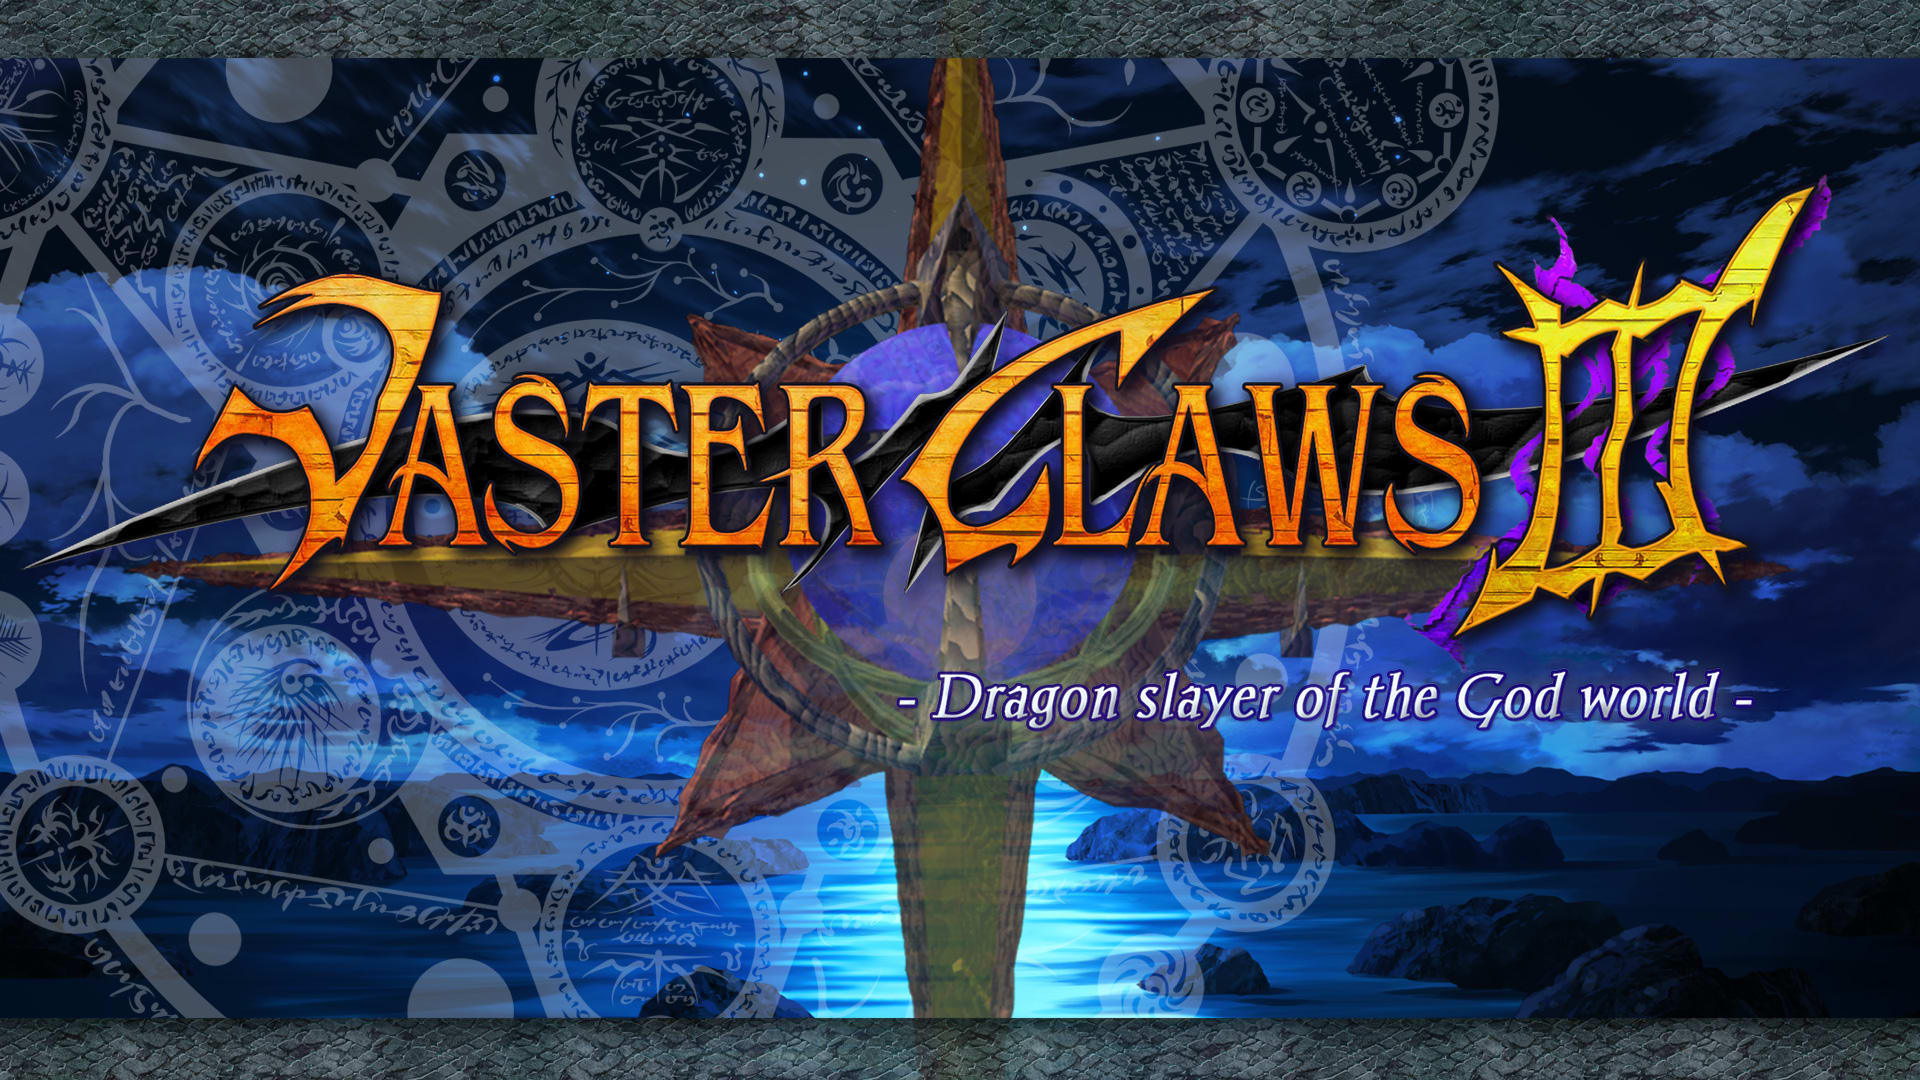 VasterClaws 3:Dragon slayer of the God world